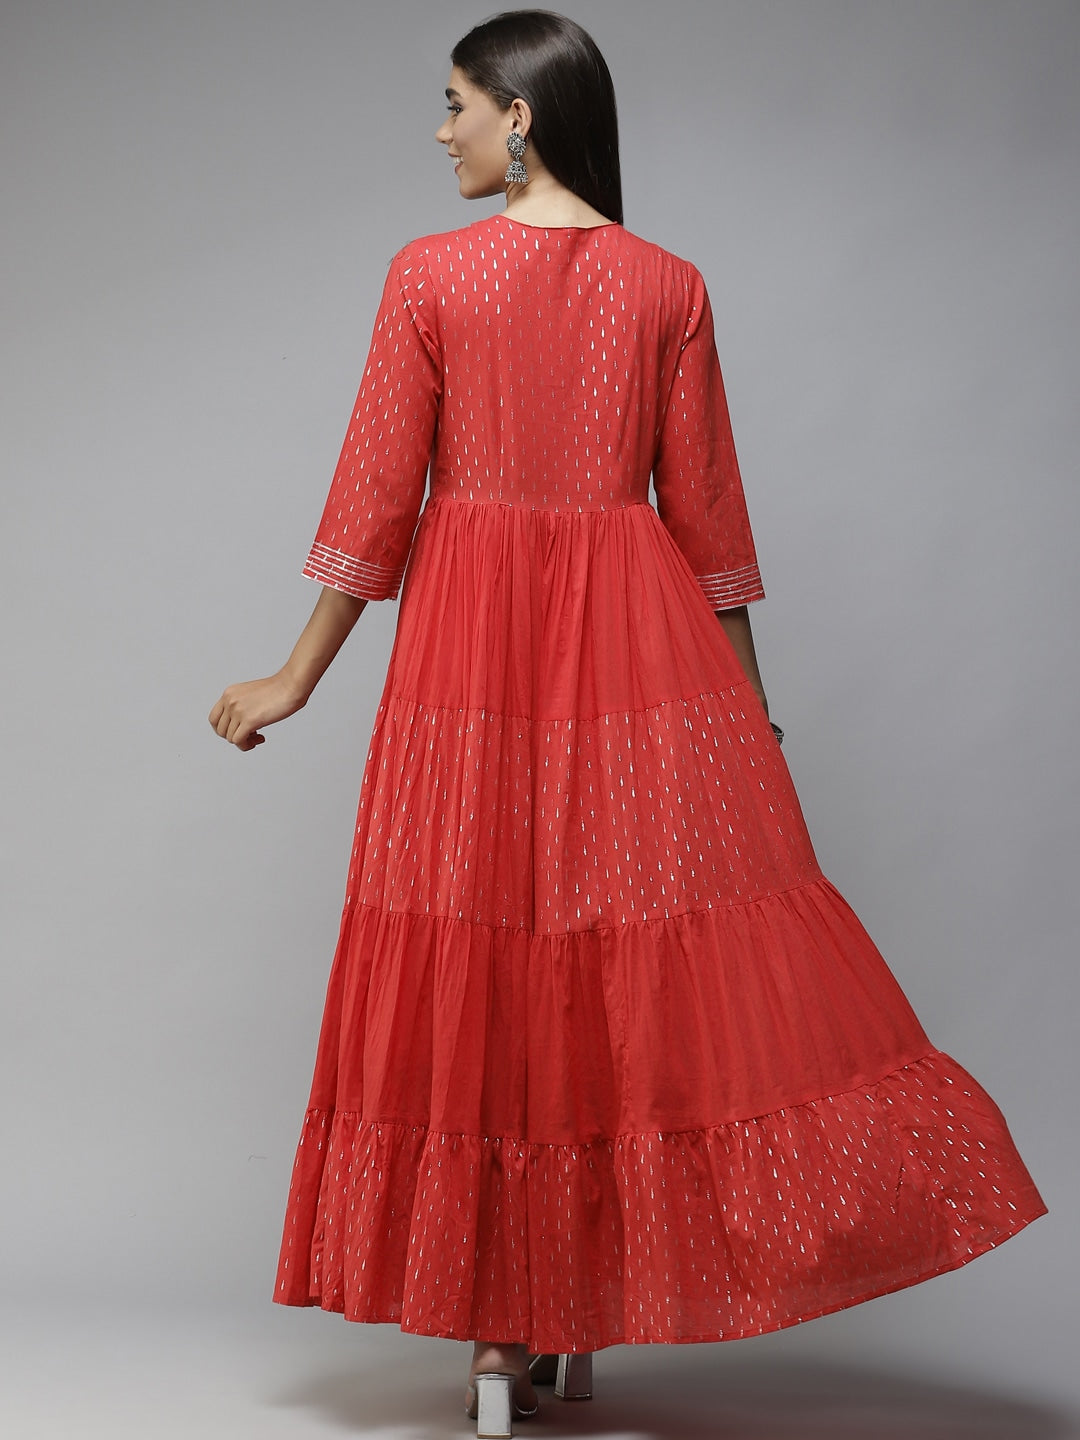 Red Gotta Patti Ethnic Maxi Dress-Yufta Store-6002DRSRDM